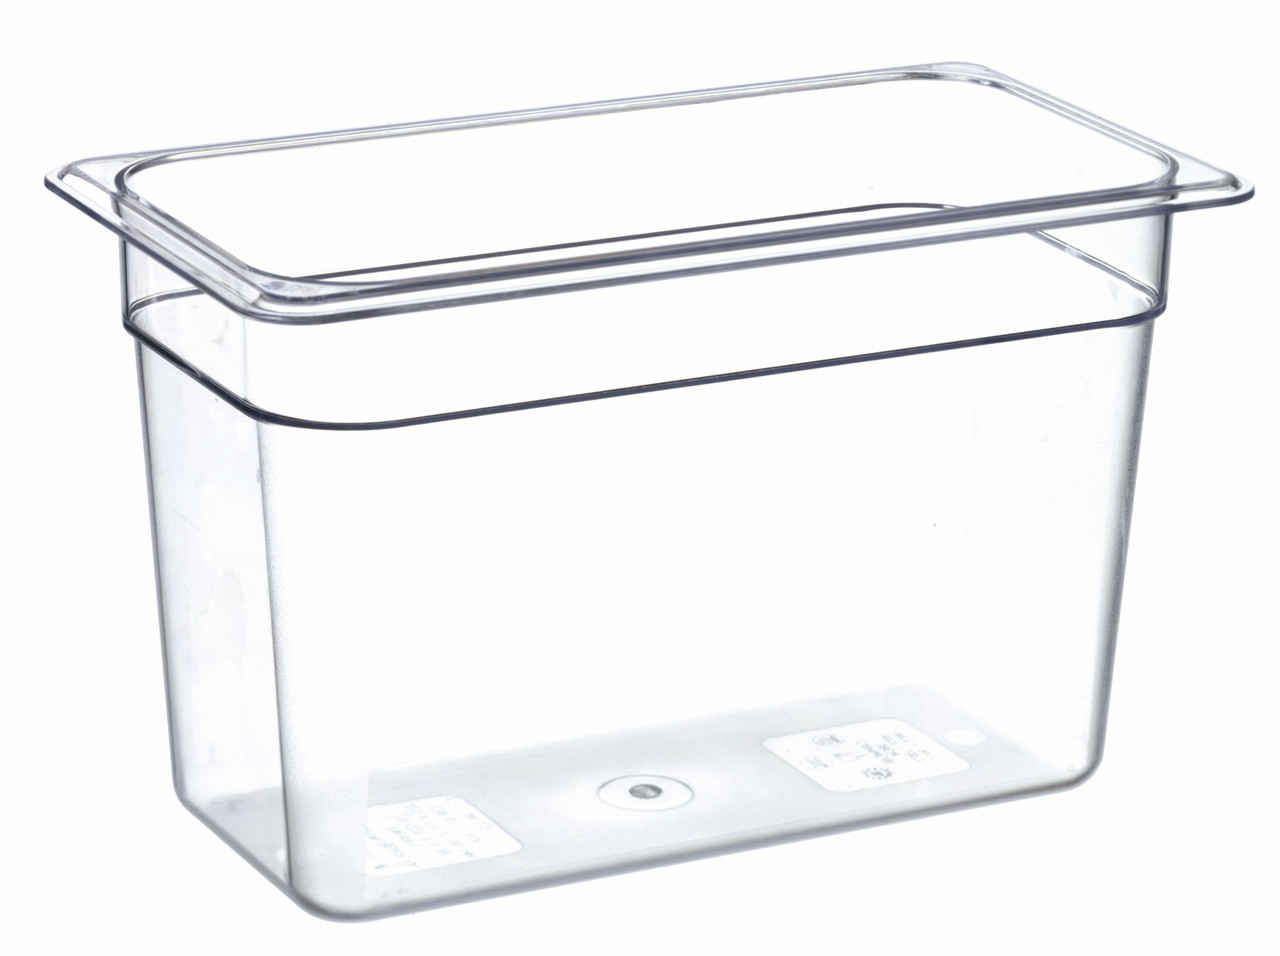 GN-Behälter, GN 1/3, 325 x 176 x 200 mm, Polycarbonat transparent